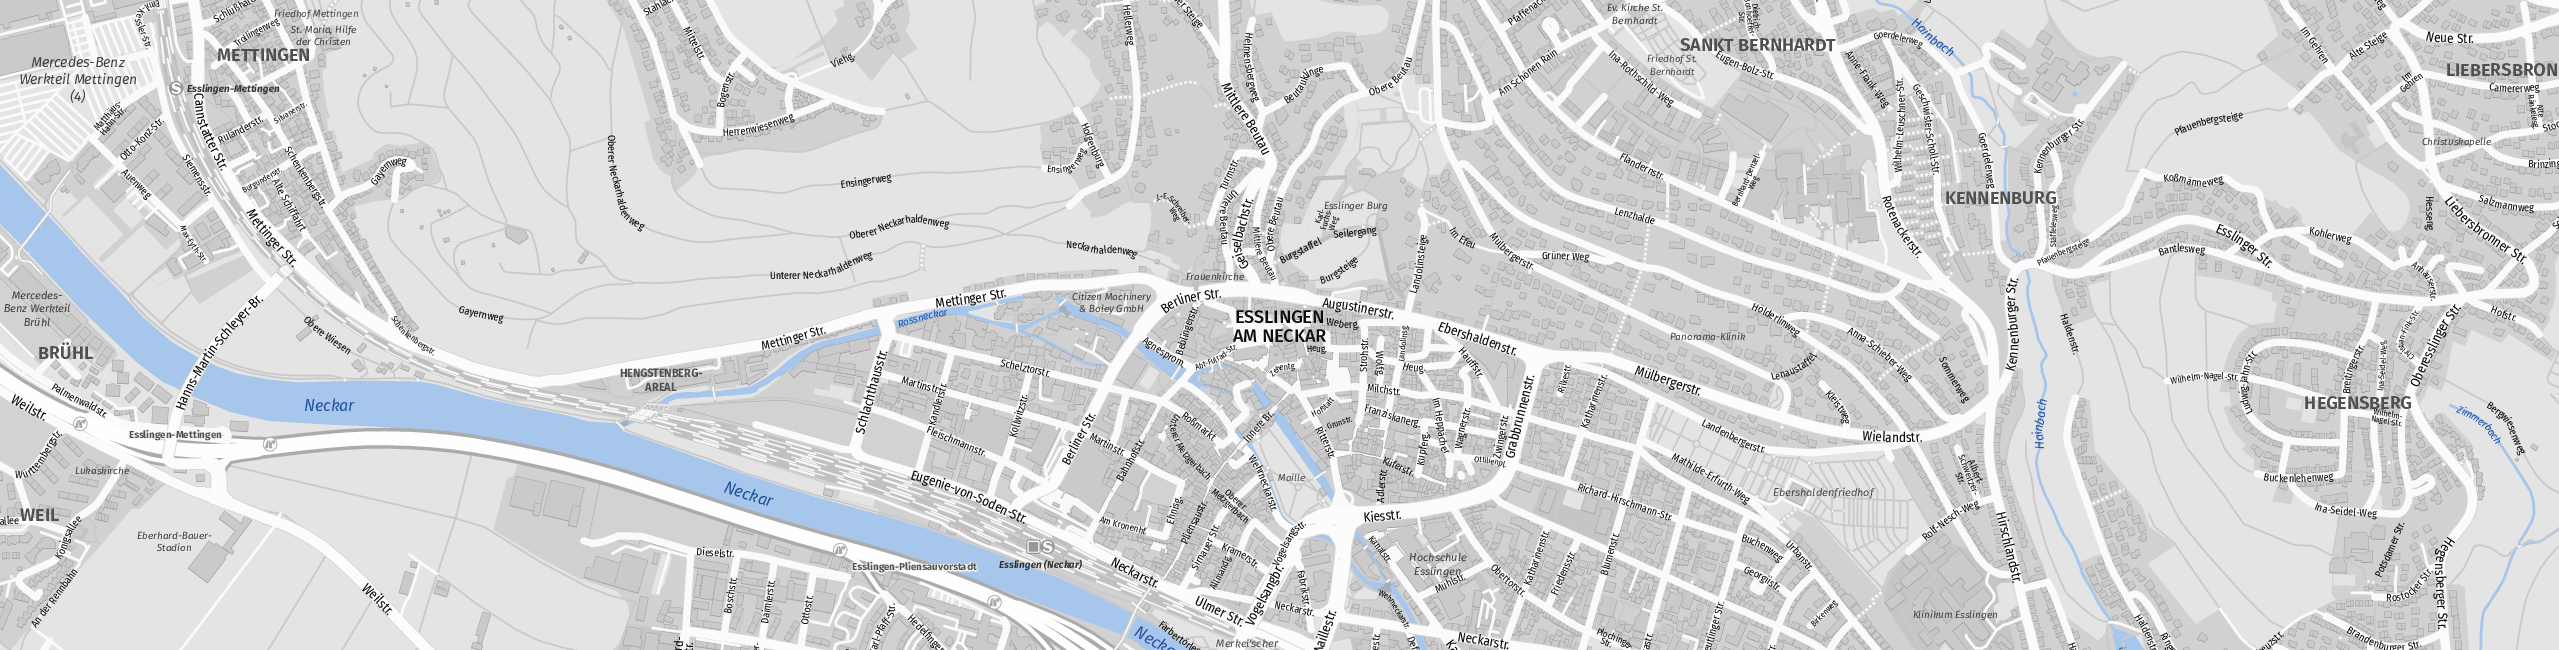 Stadtplan Esslingen am Neckar zum Downloaden.